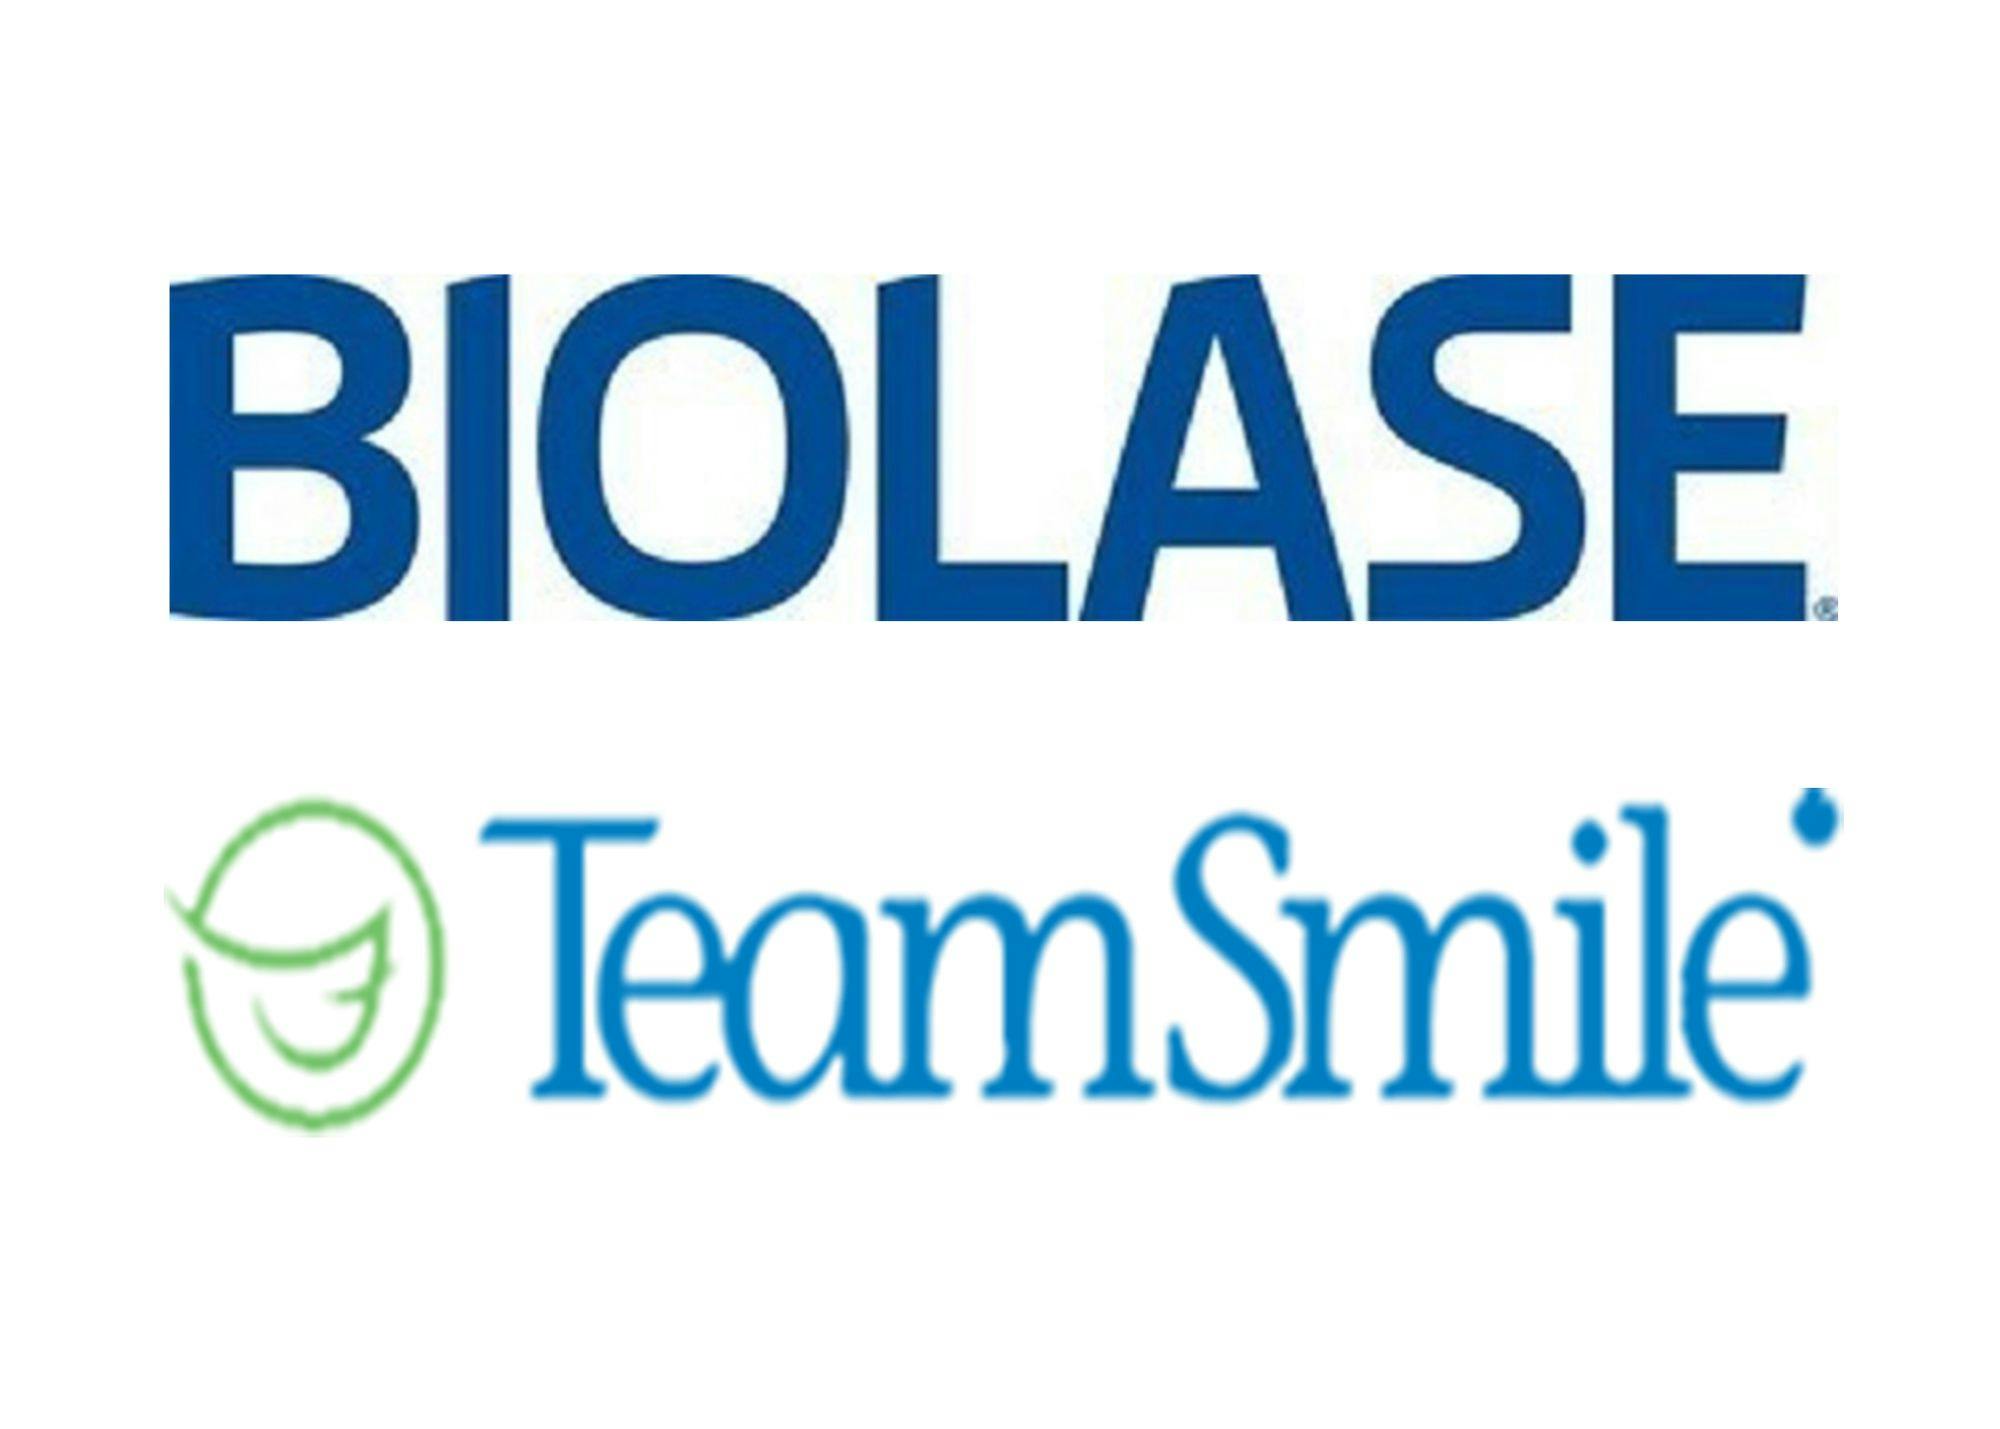 BIOLASE Announces Partnership with TeamSmile